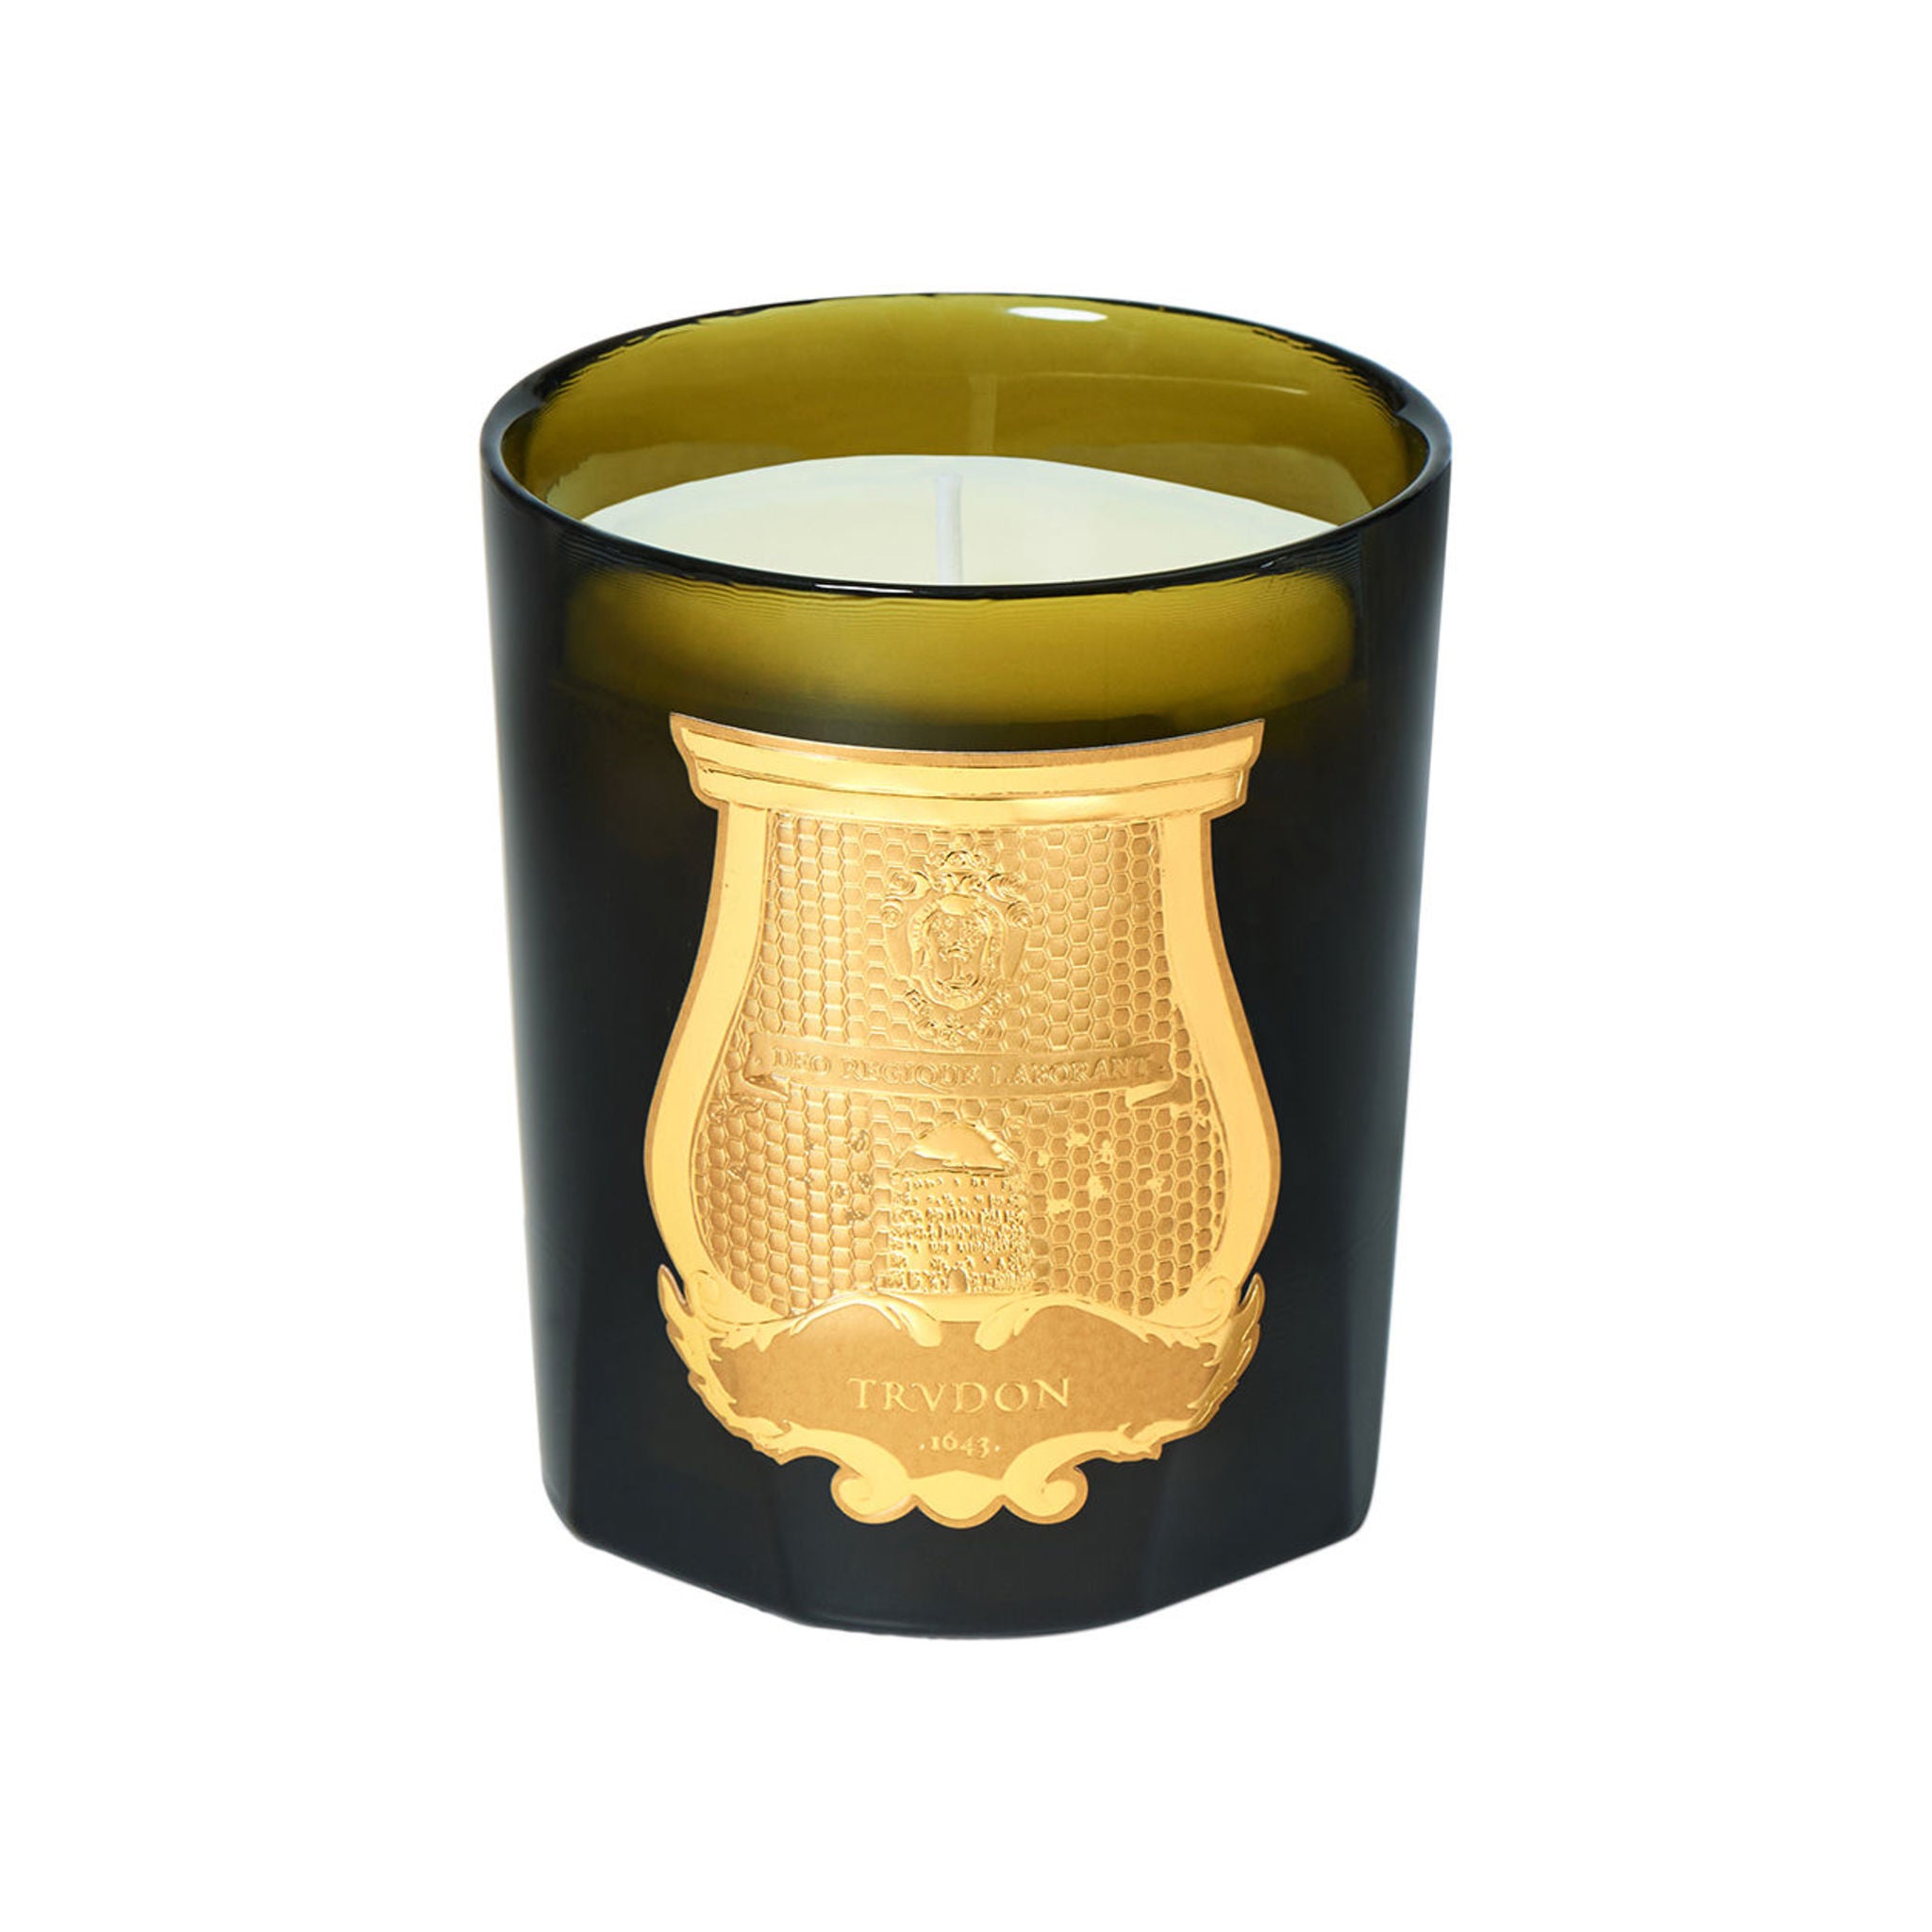 Trudon Abd El Kader Candle Size variant: 9.5 oz (Classic) main image.